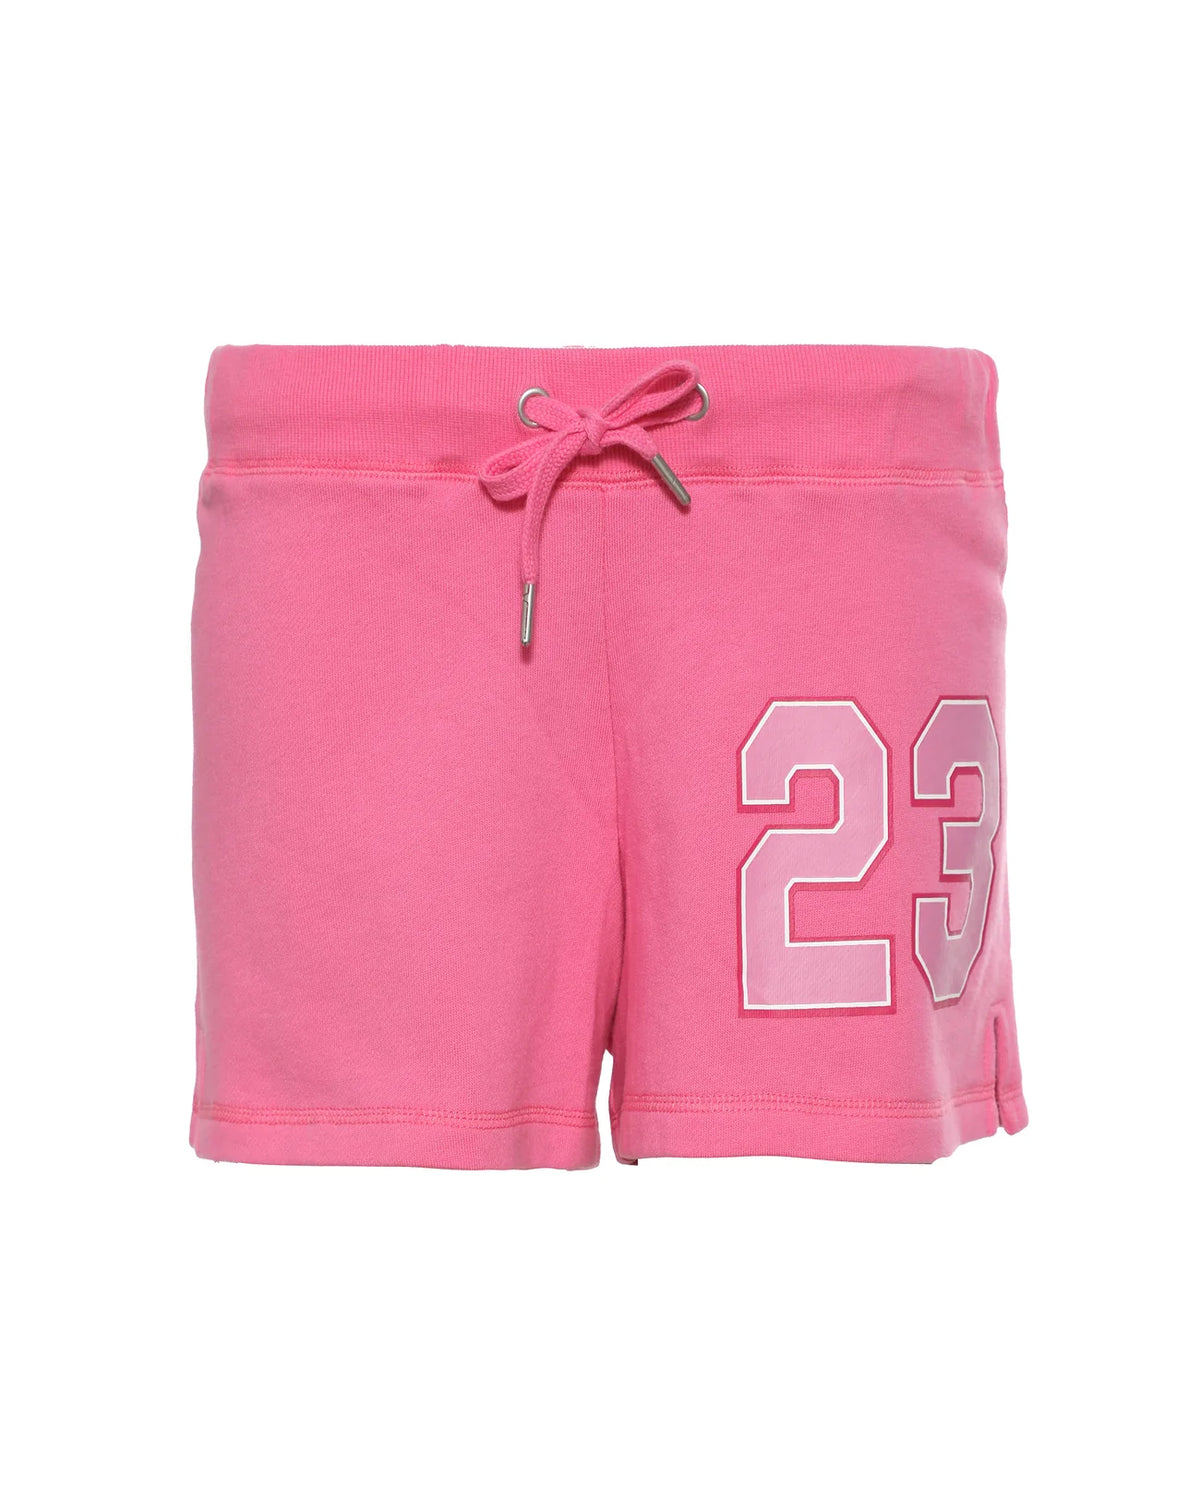 Dream Team Pink V2 Shorts